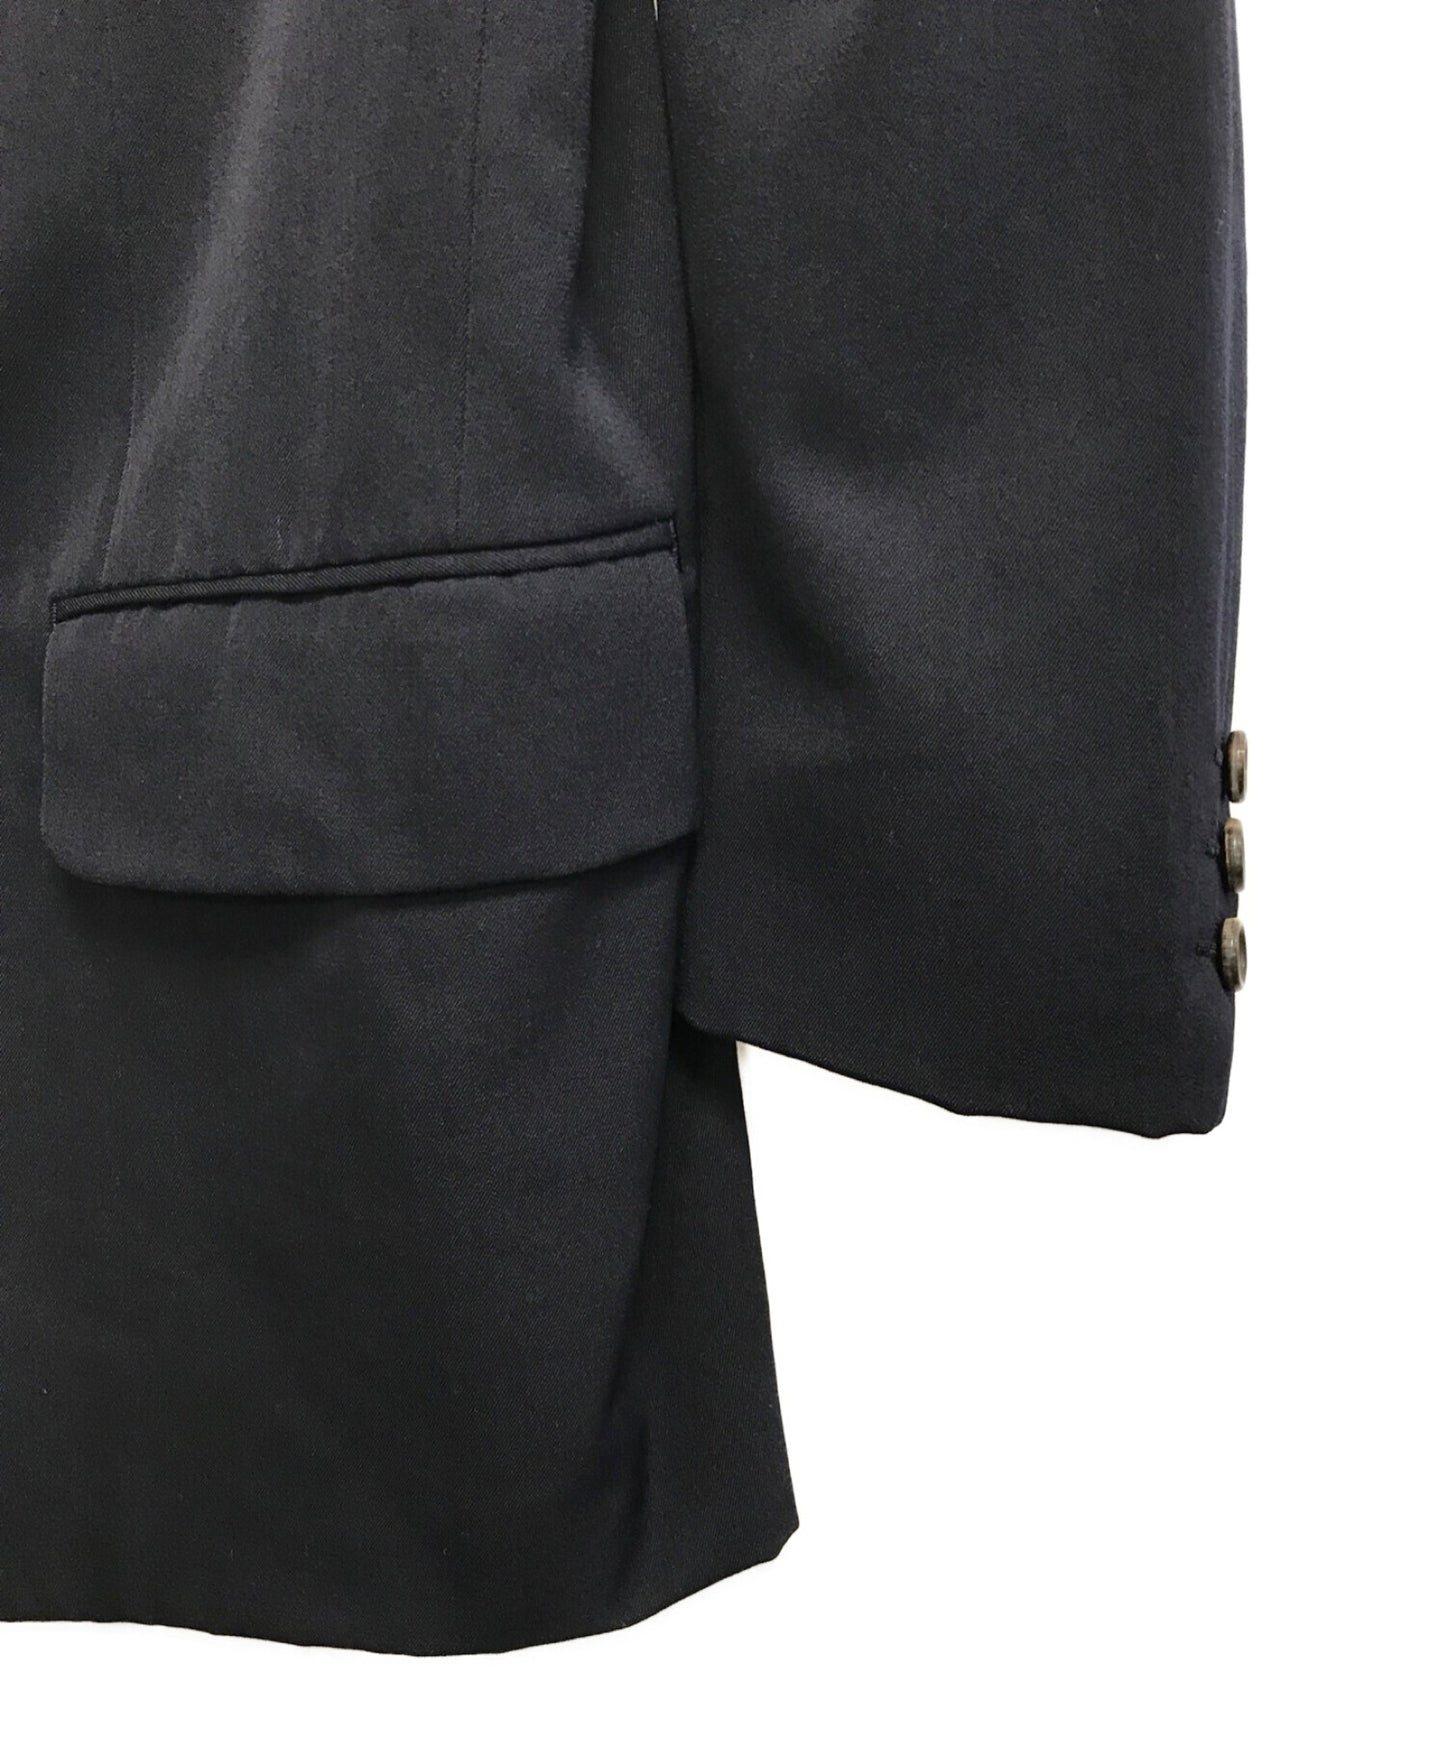 [Pre-owned] COMME des GARCONS HOMME DEUX [OLD] Tailored Jacket DJ-95006M